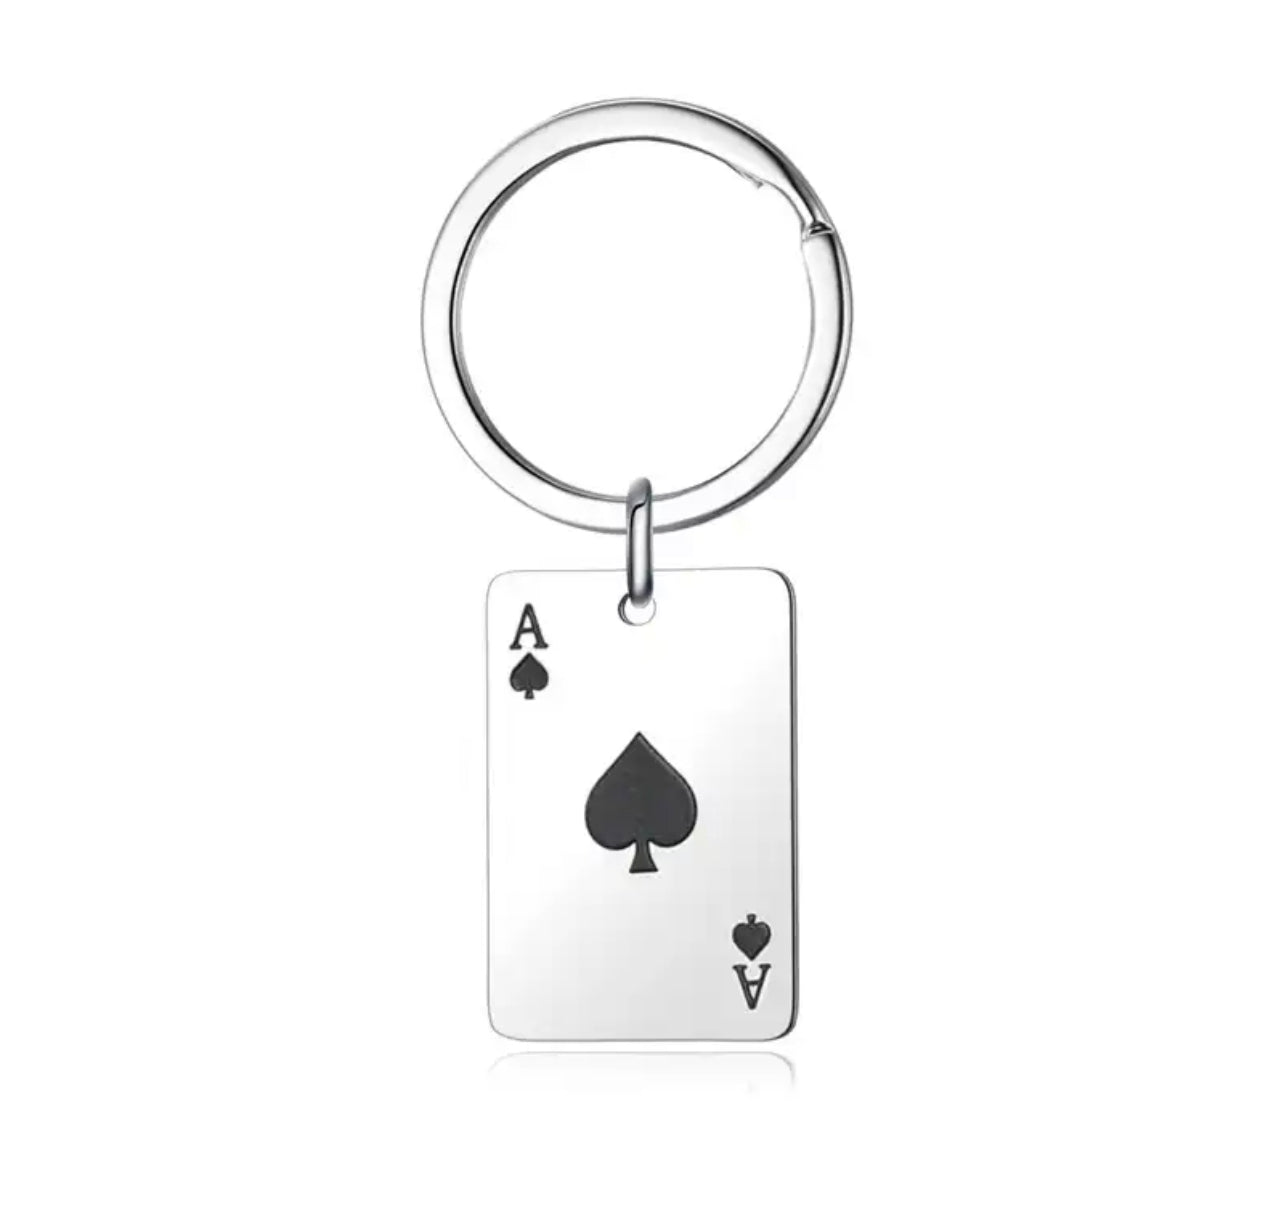 Ace card key chain - מחזיק מפתחות מגניב במיוחד בעיצוב אס לב/עלה iphone case FantasyCaseIL